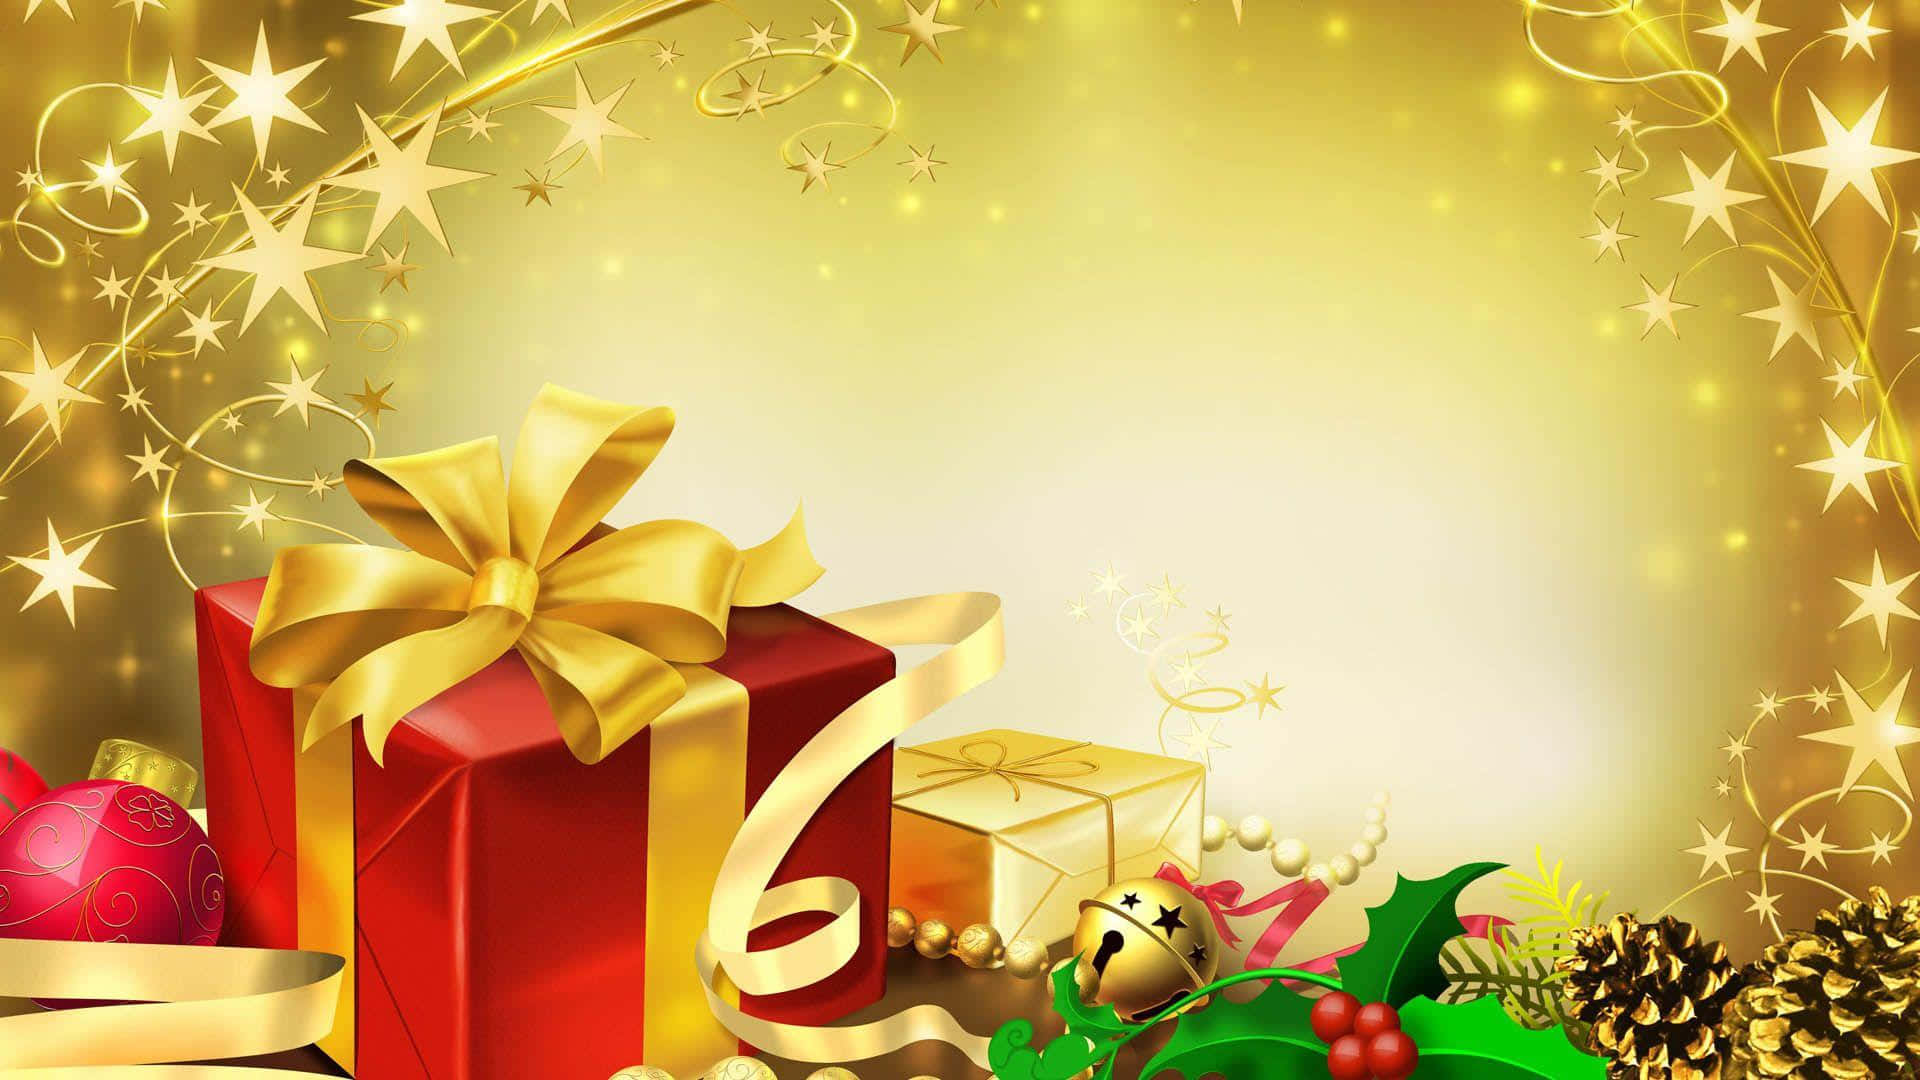 Julebaggrund med et gyldent gavekasse og dekorationer